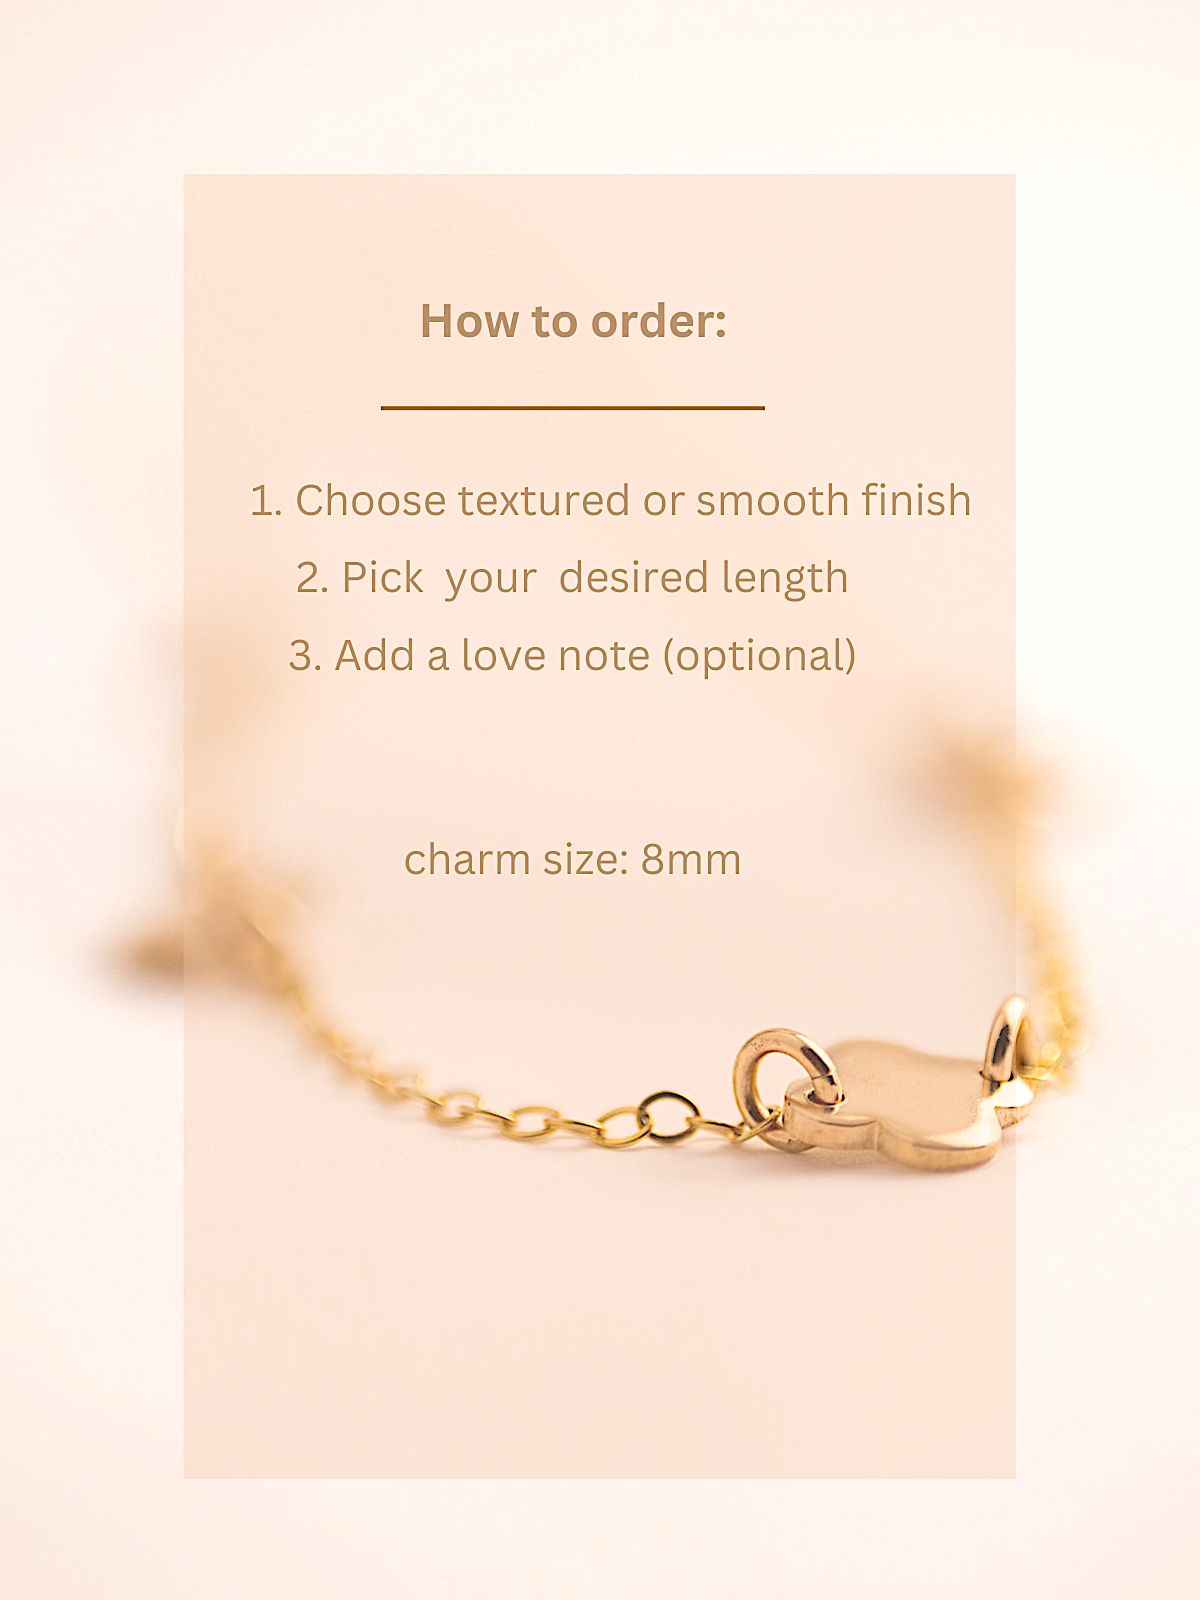 How to order 4 leaf clover pendant letter necklace